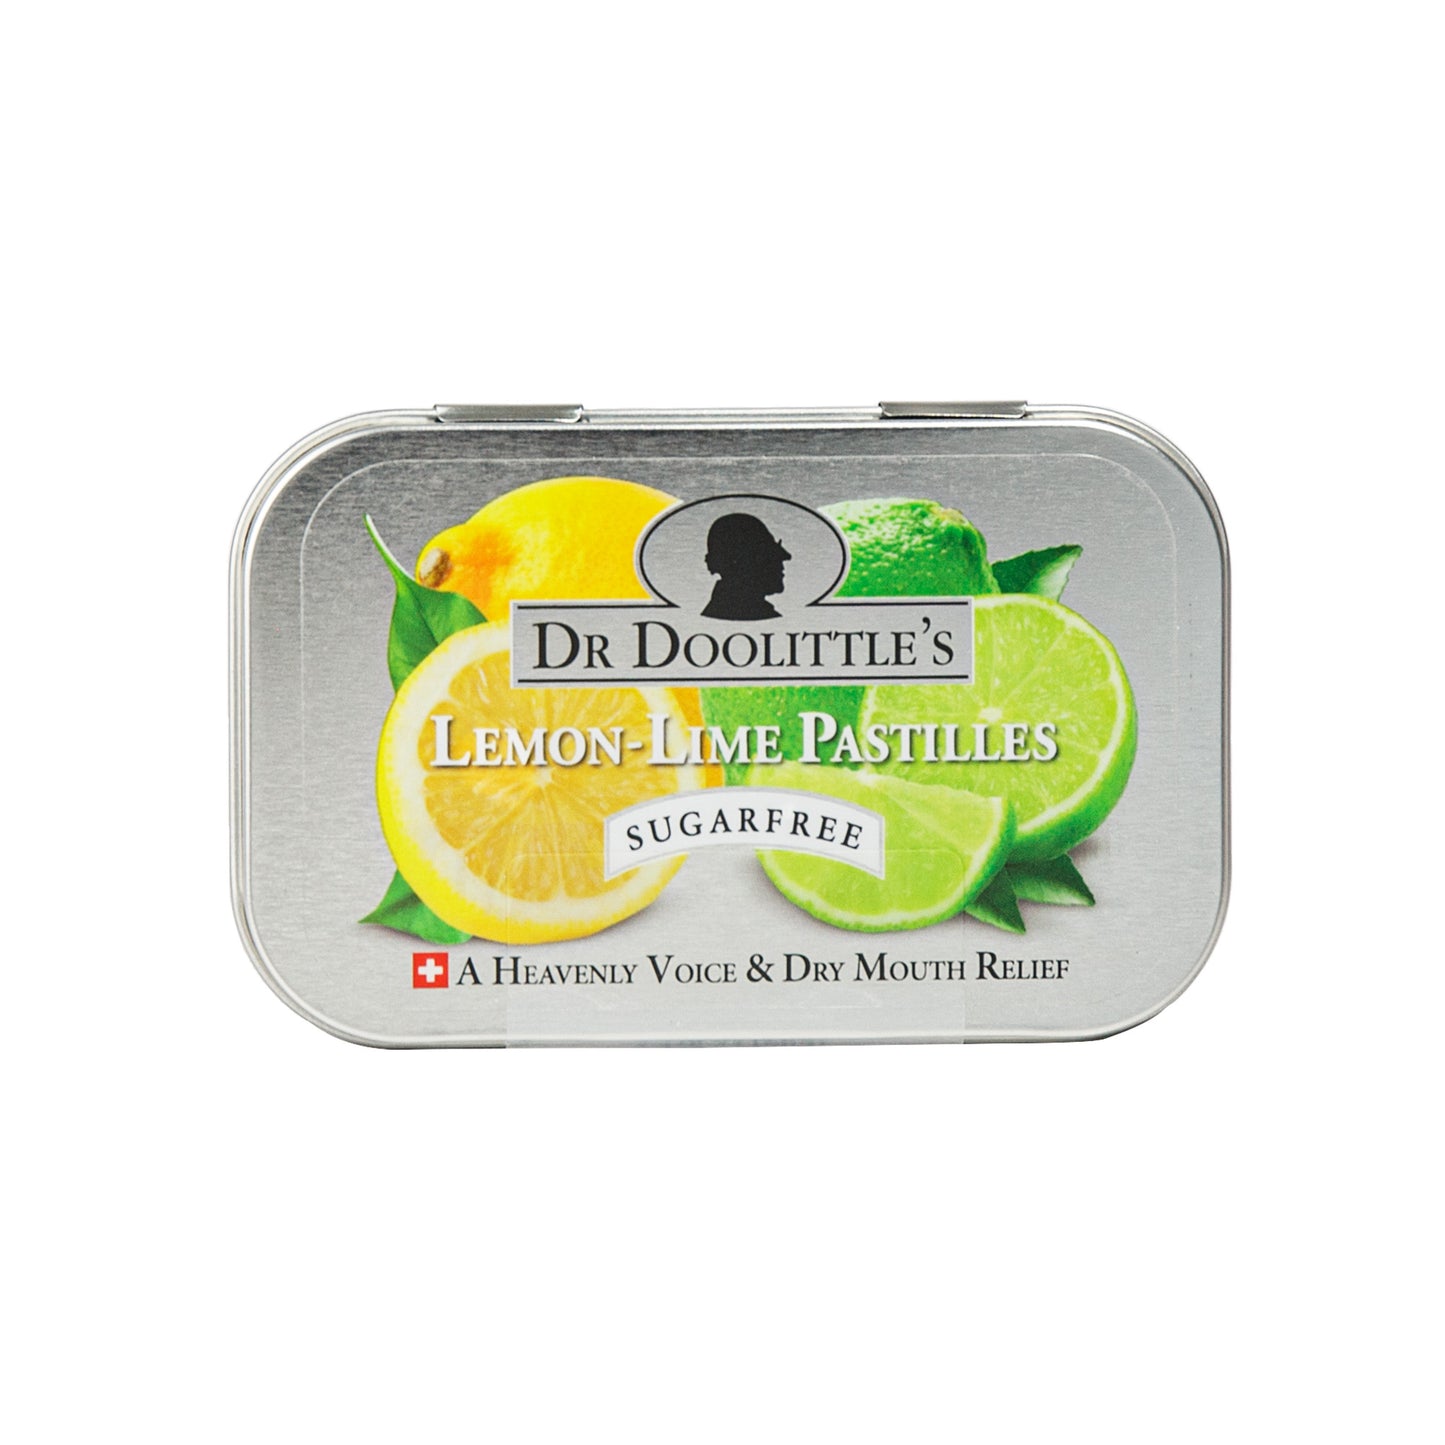 Primary image of Lemon-Lime Pastilles Sugar Free